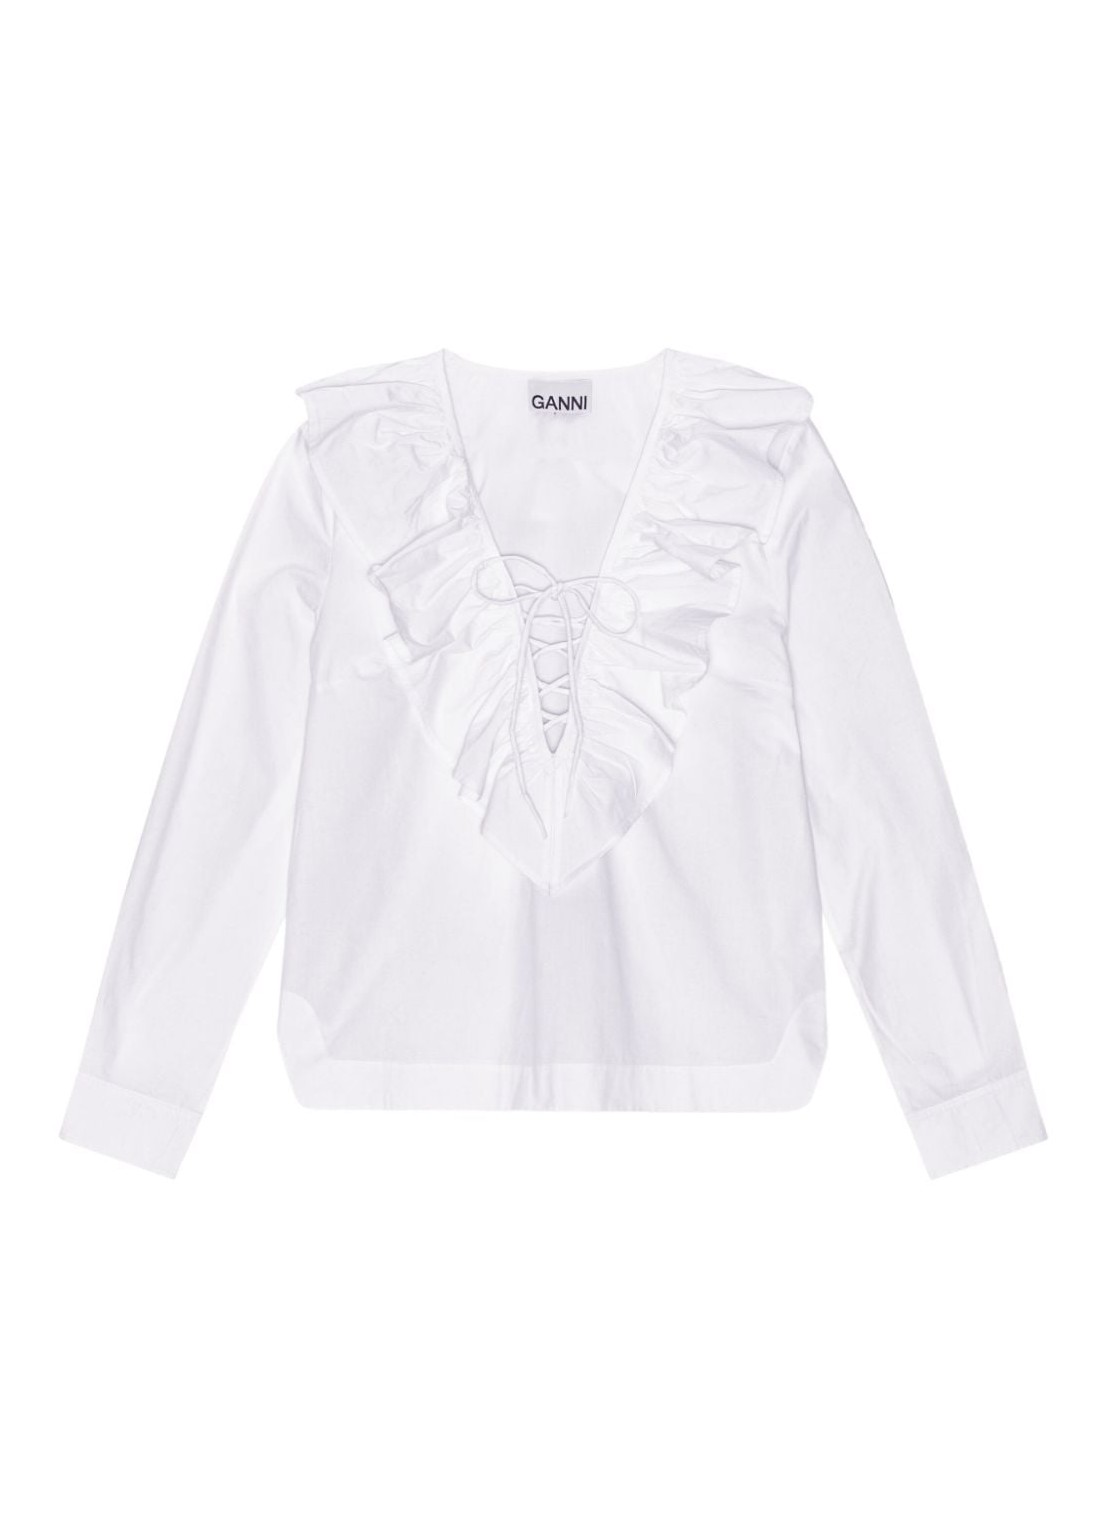 Blusa ganni t-shirt woman cotton poplin ruffle v-neck blouse f8701 151 talla 38
 